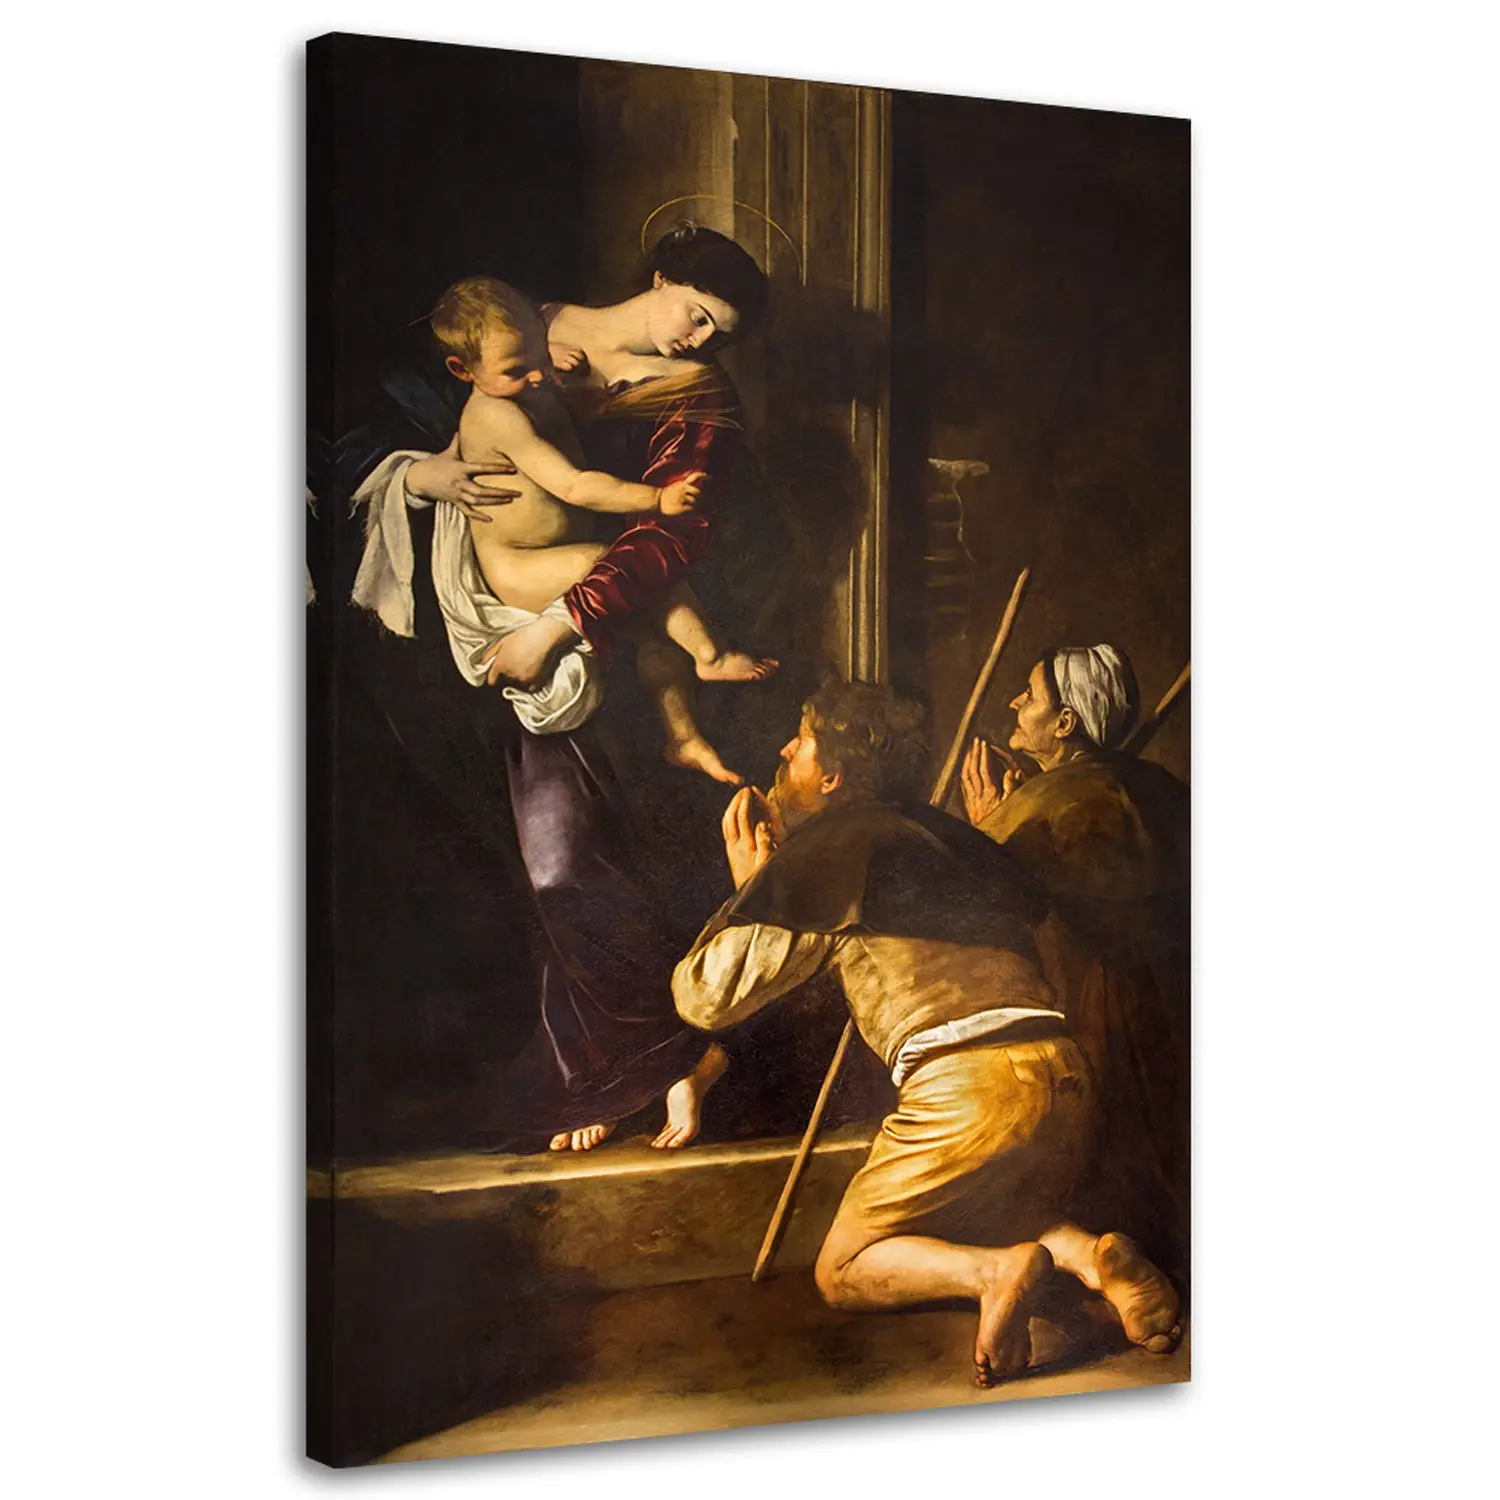 Wandbild Loreto Caravaggio von Madonna